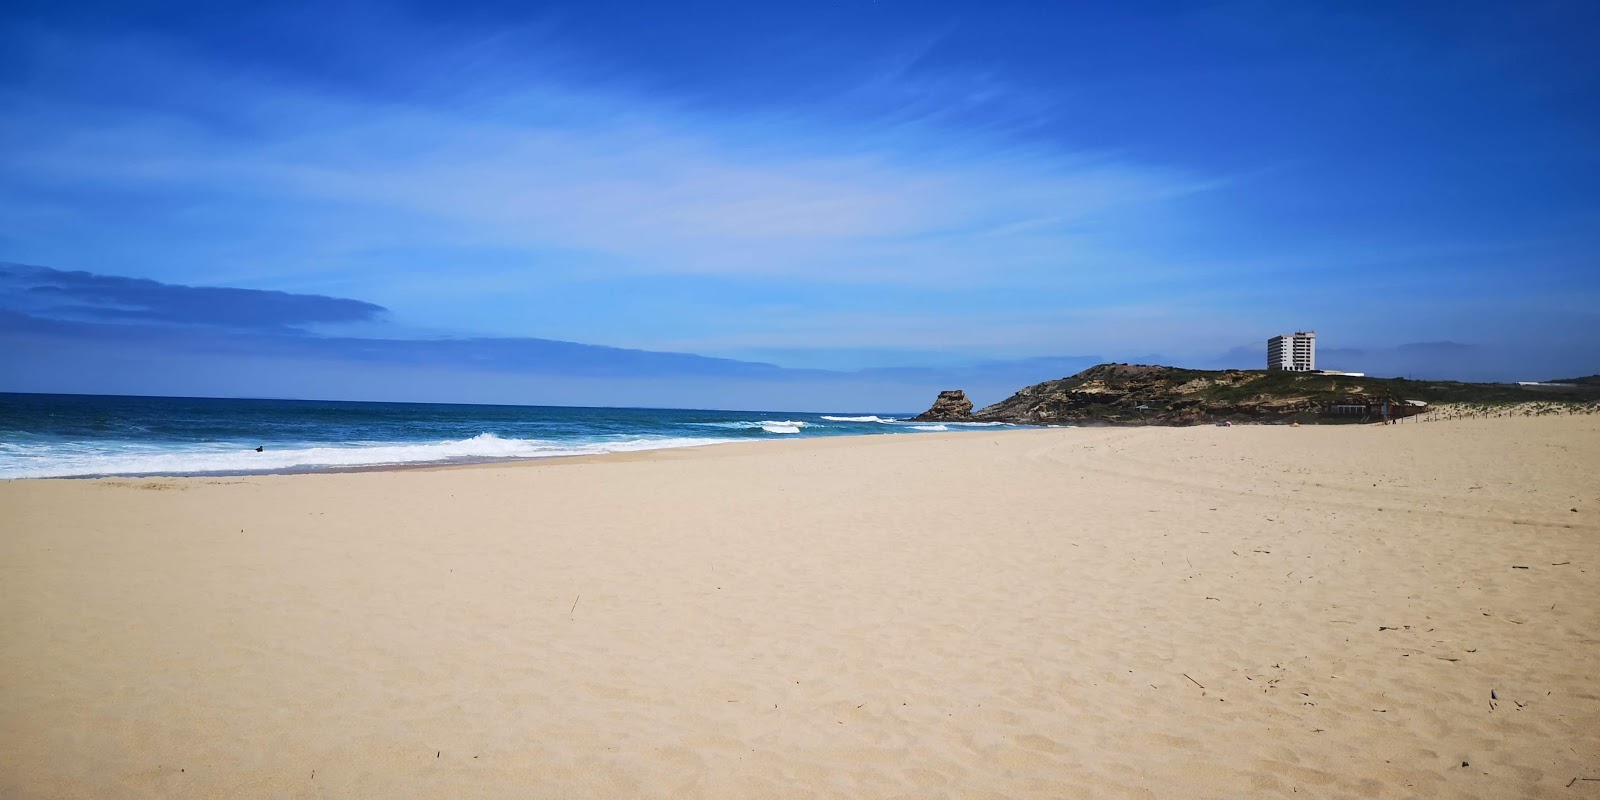 Foto van Praia de Santa Rita met turquoise water oppervlakte